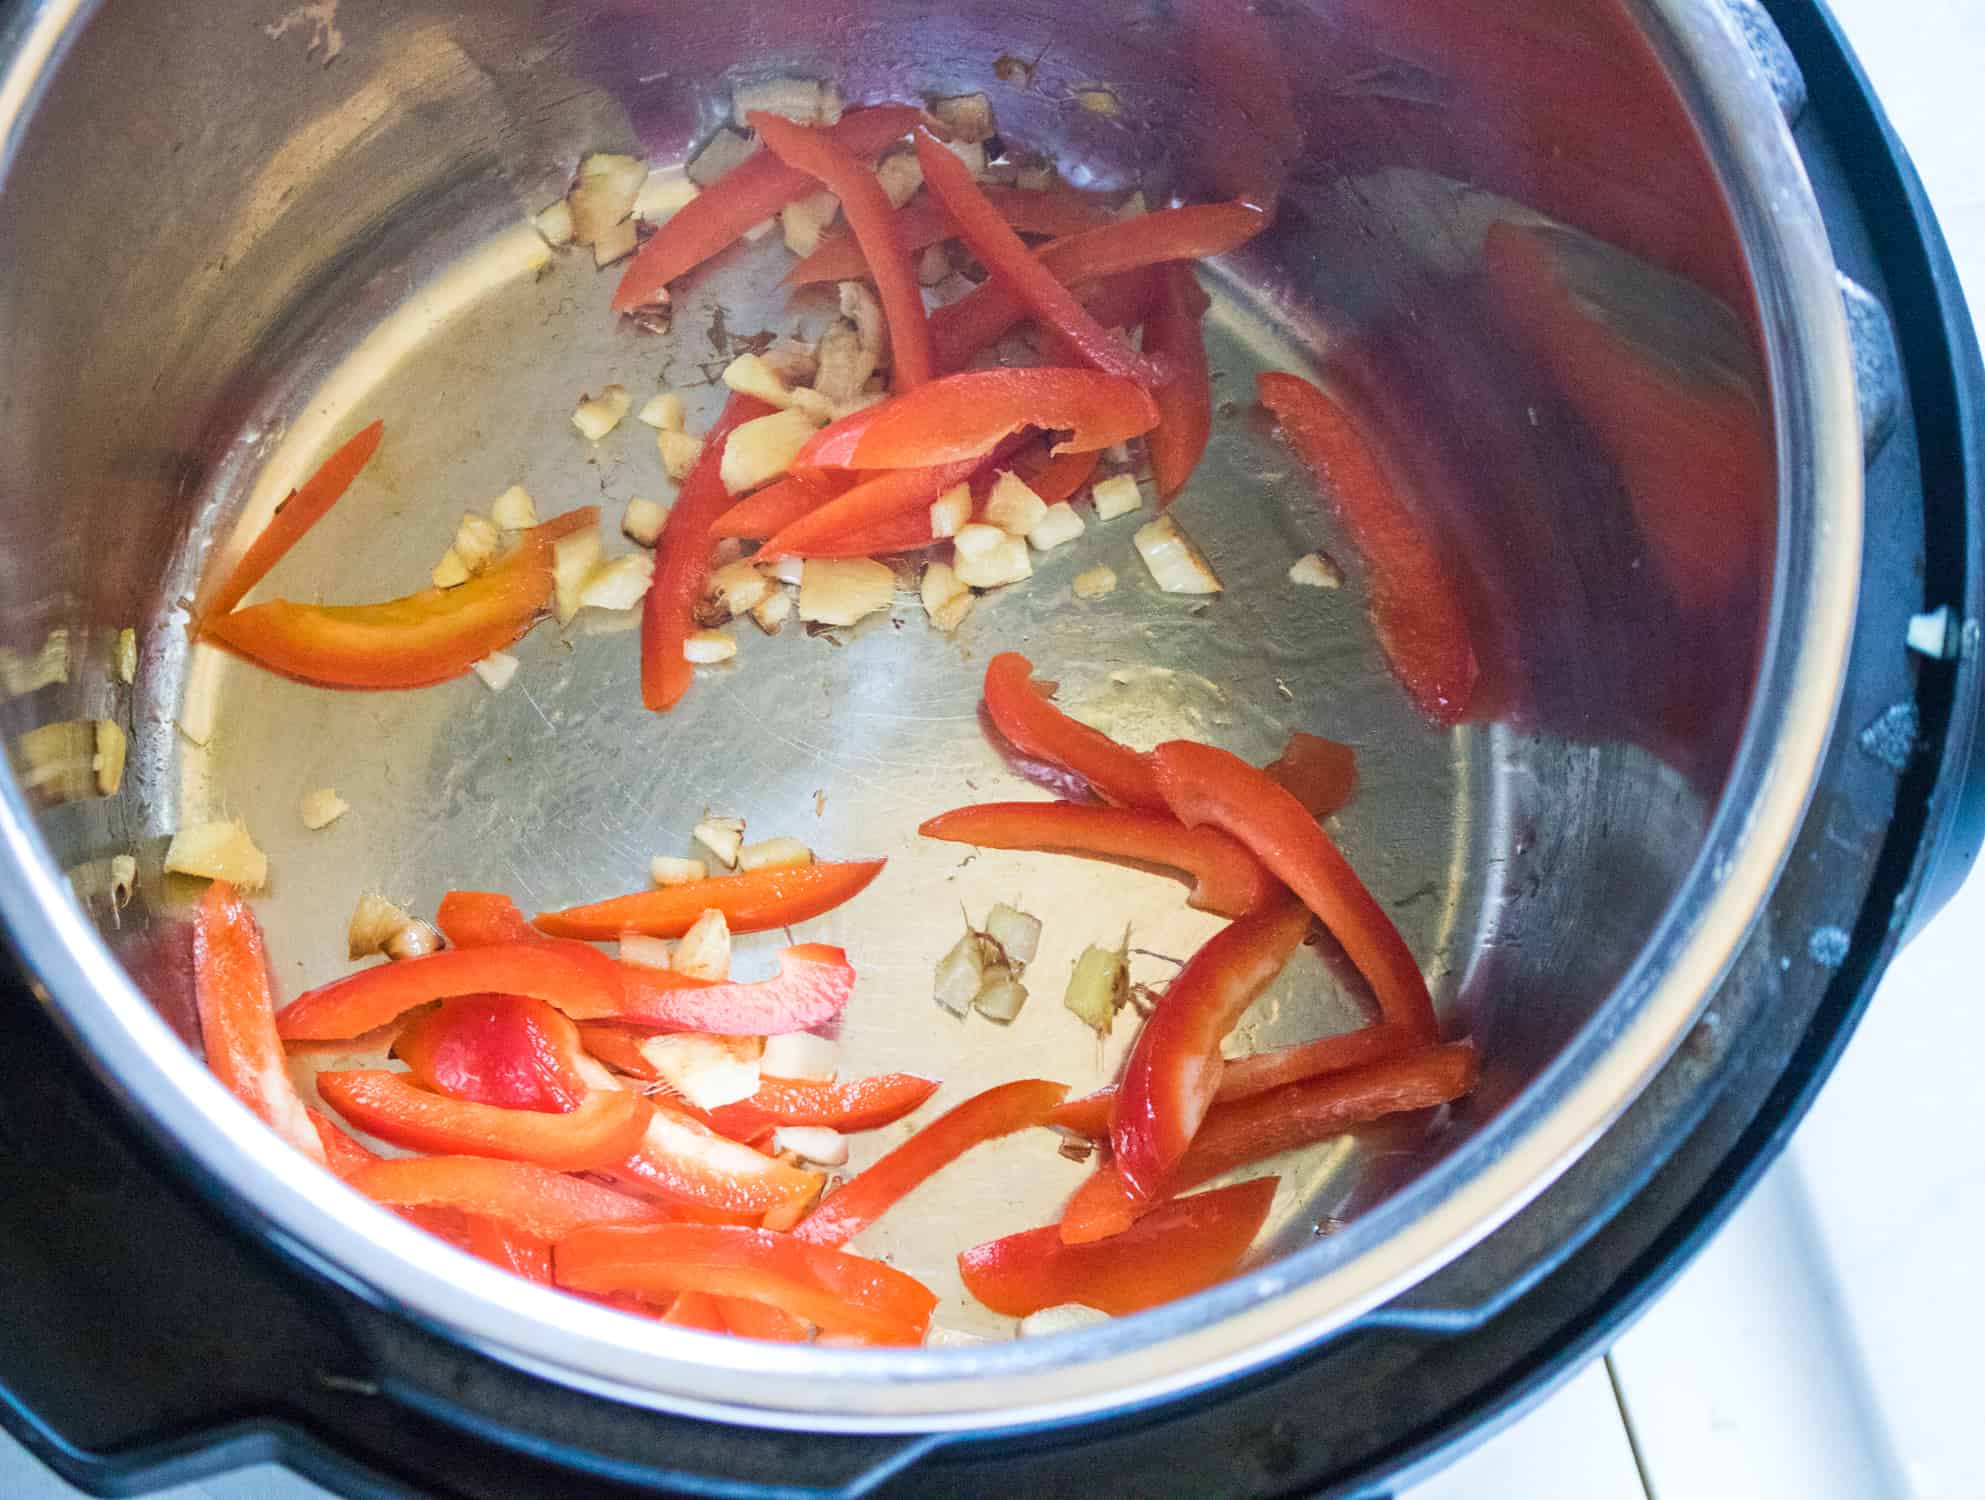 Ginger, garlic and sliced peppers in sesame oil inside an Instant Pot